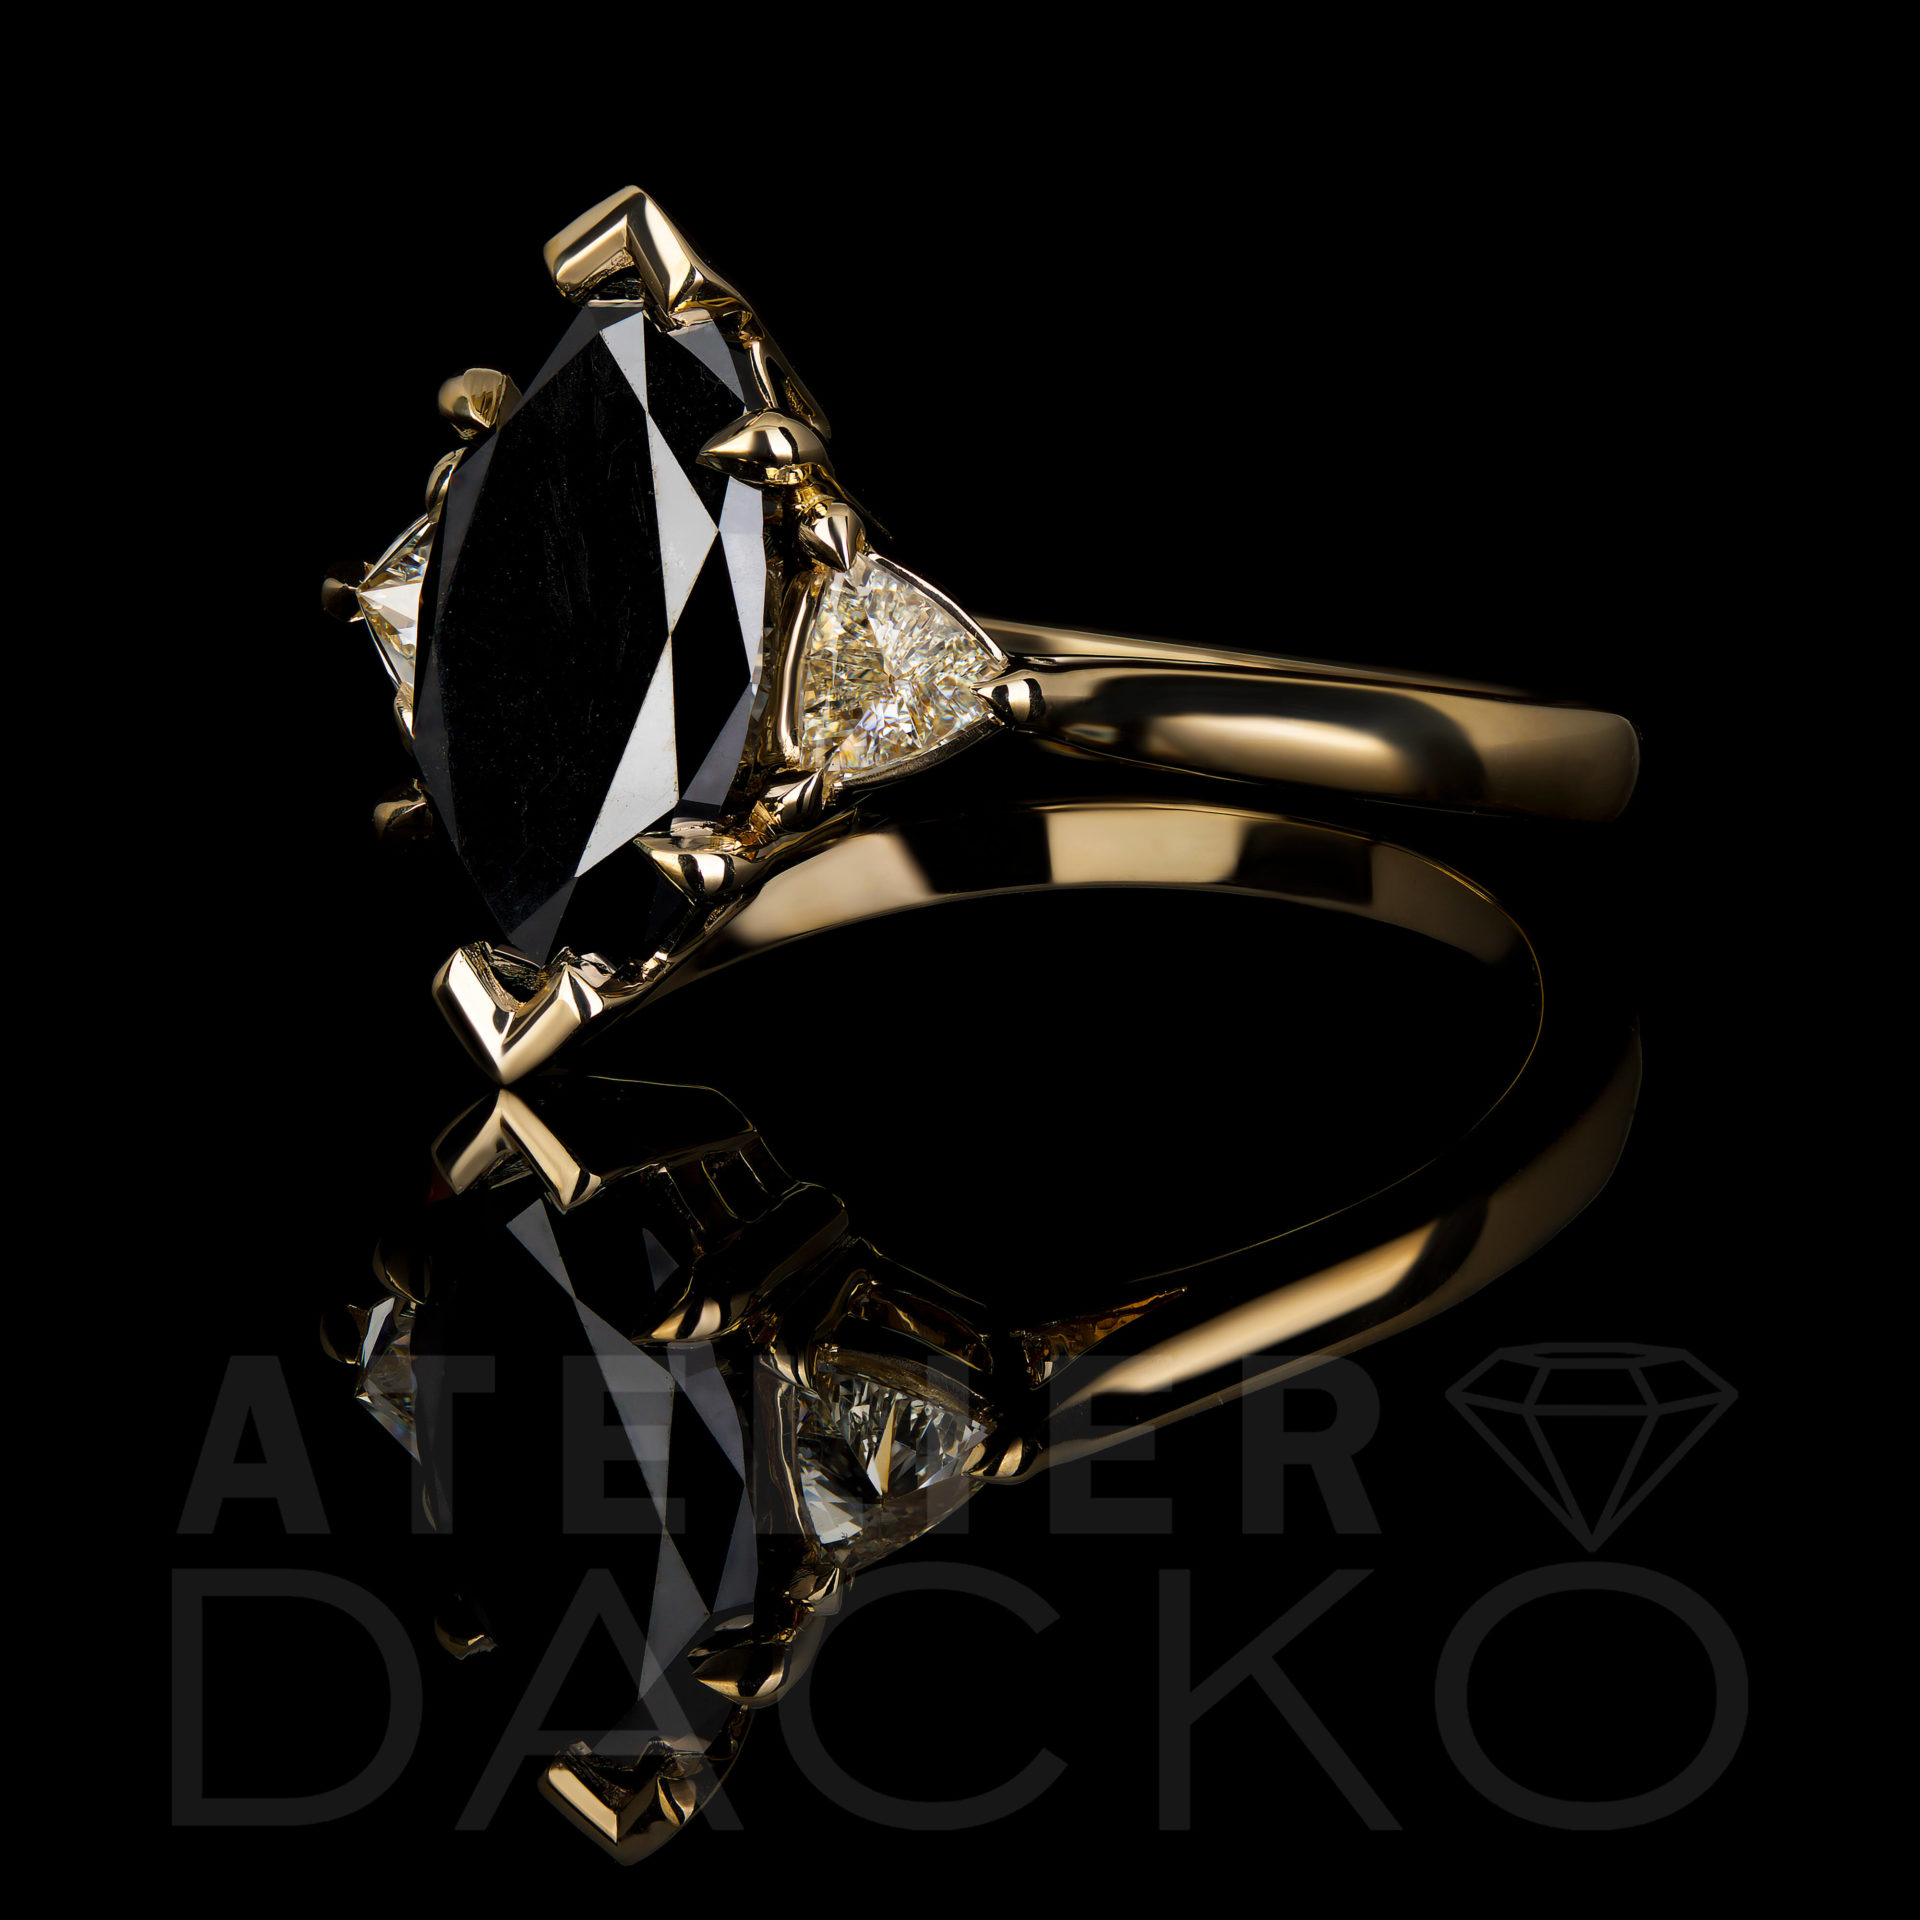 AD022 - 1.97 CT Marquise Black Diamond Ring in Three-Stone Setting - 2